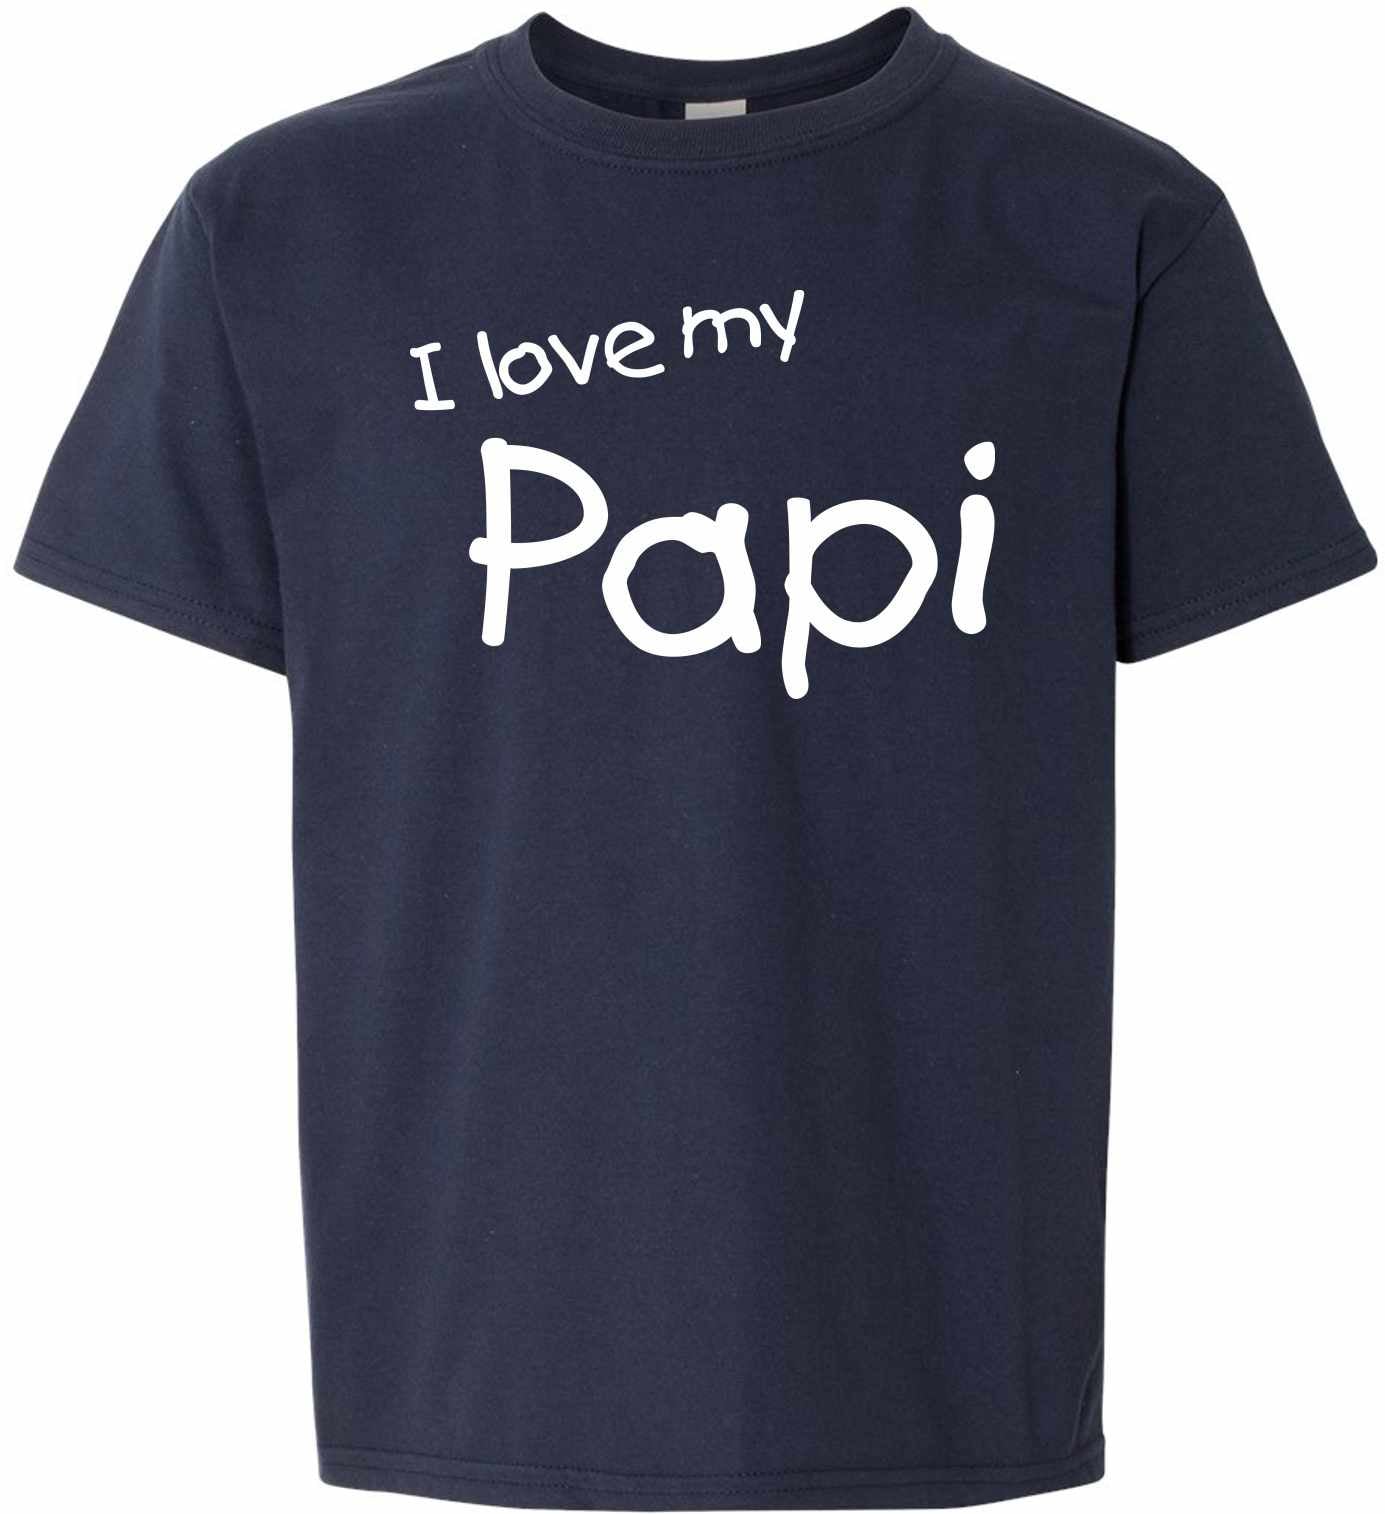 I Love My Papi on Kids T-Shirt